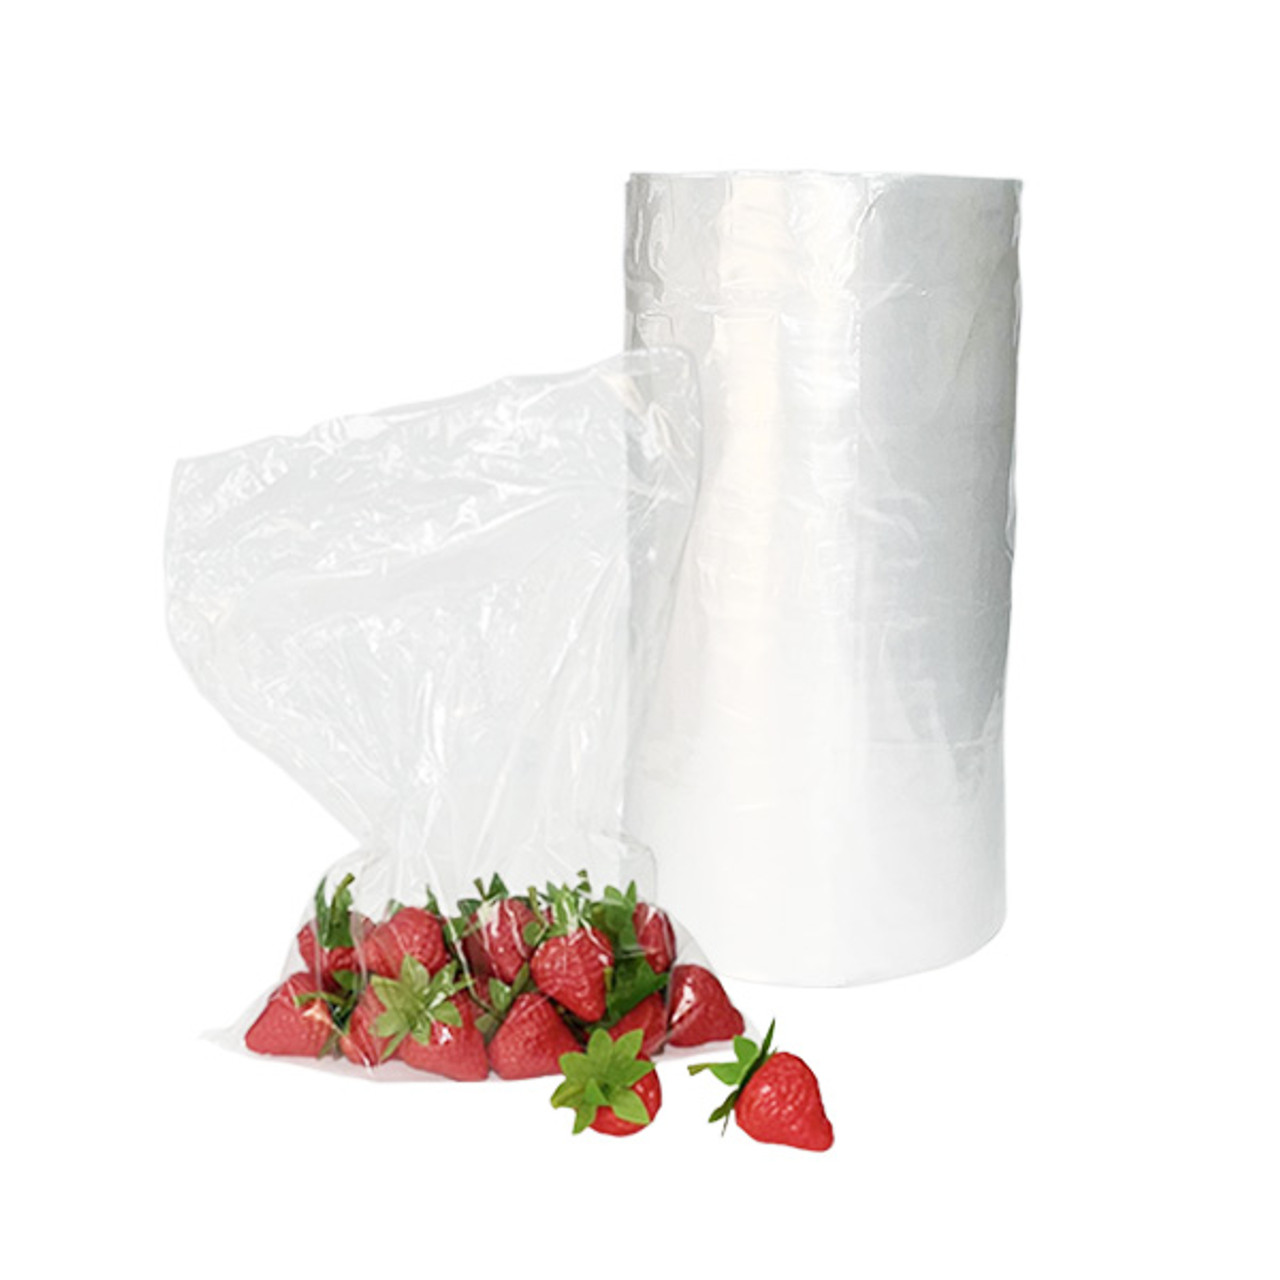 10-1/2" x 15" LD Clear Produce Bags On a Roll 30 Micron (580 Bags/rl)